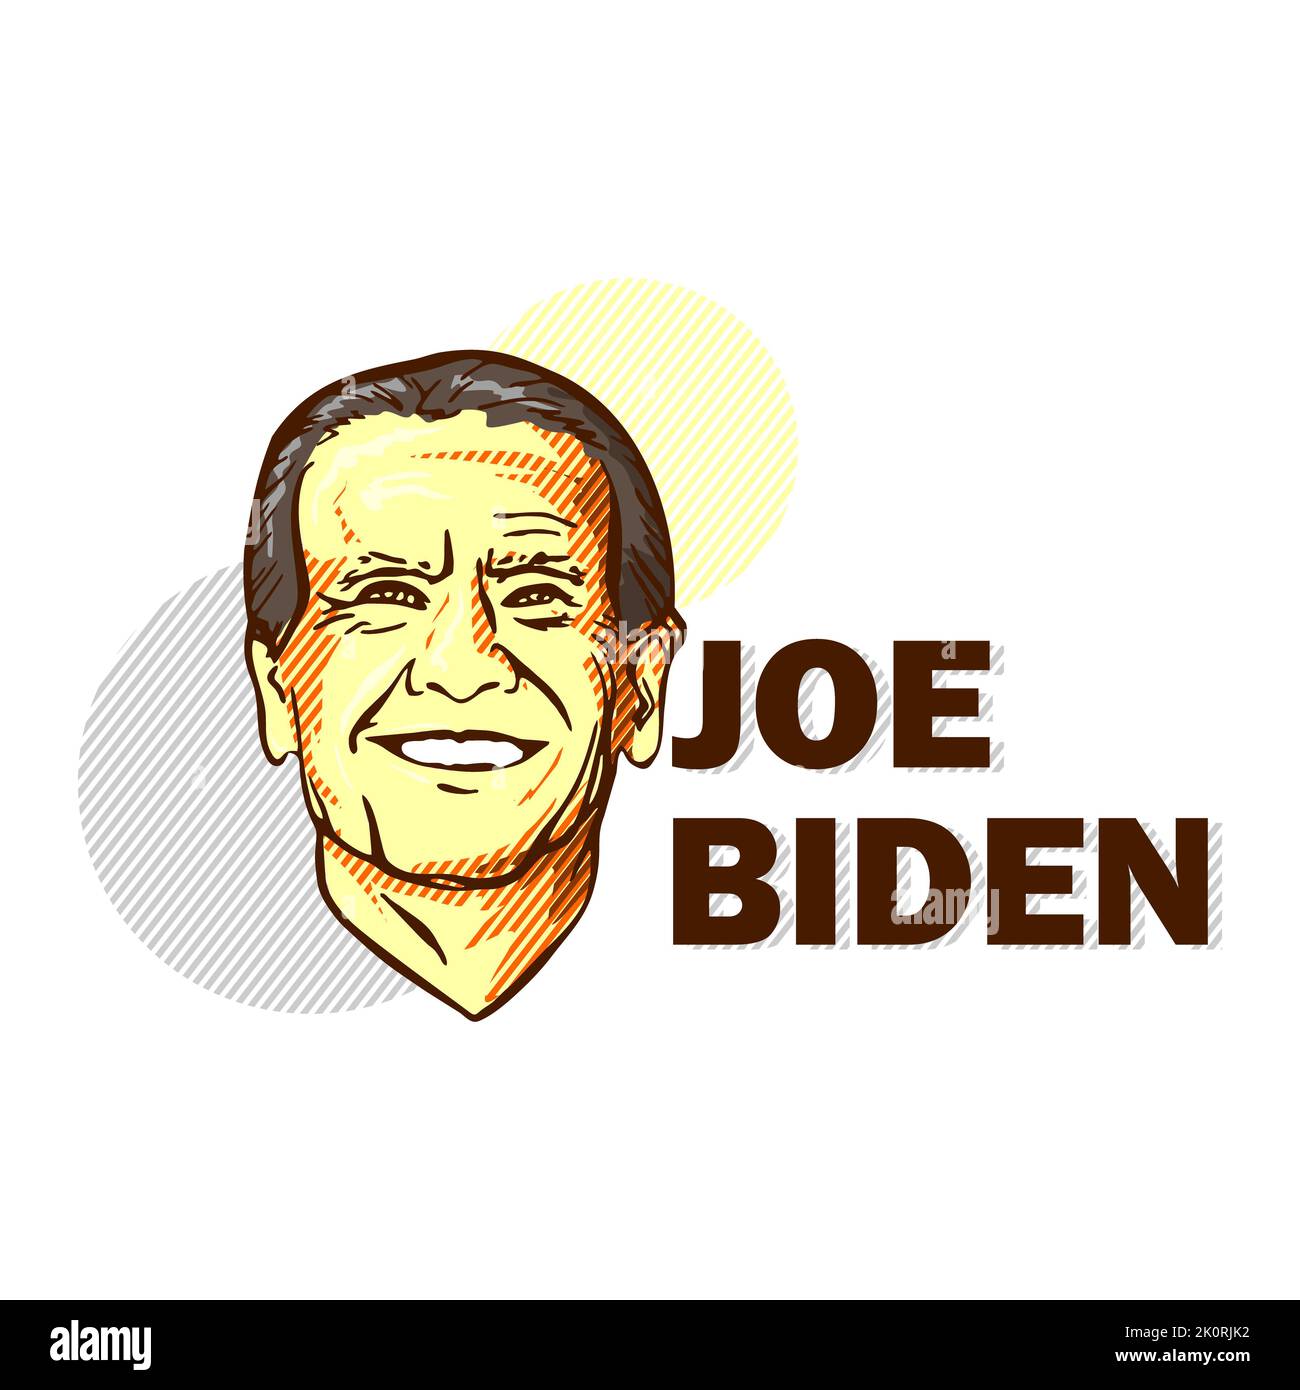 January 2020: A cartoon vector illustration of Joe Biden head, on white background Stock Photo